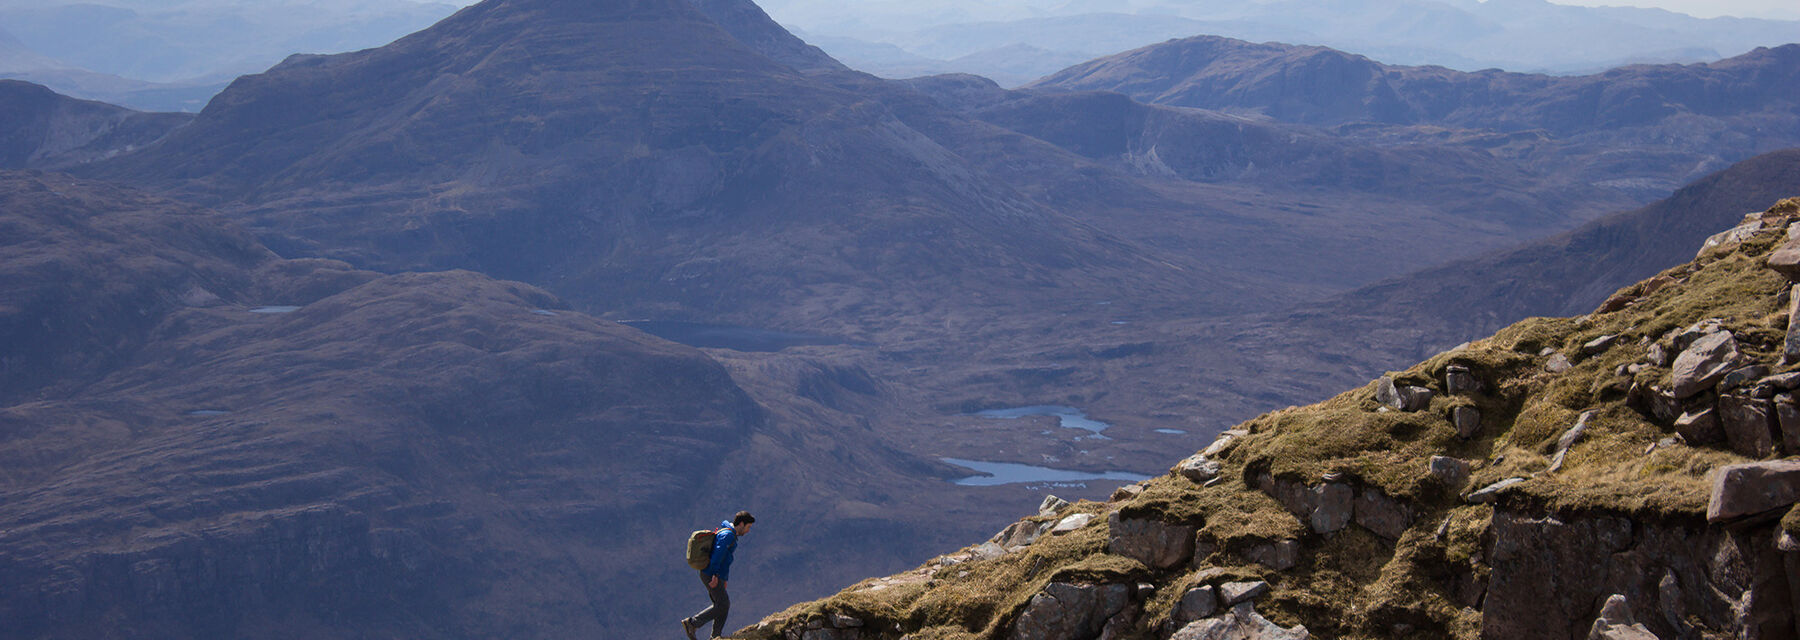 A young man hiking a knife-edged mountain ridge on the Liathach Ridge